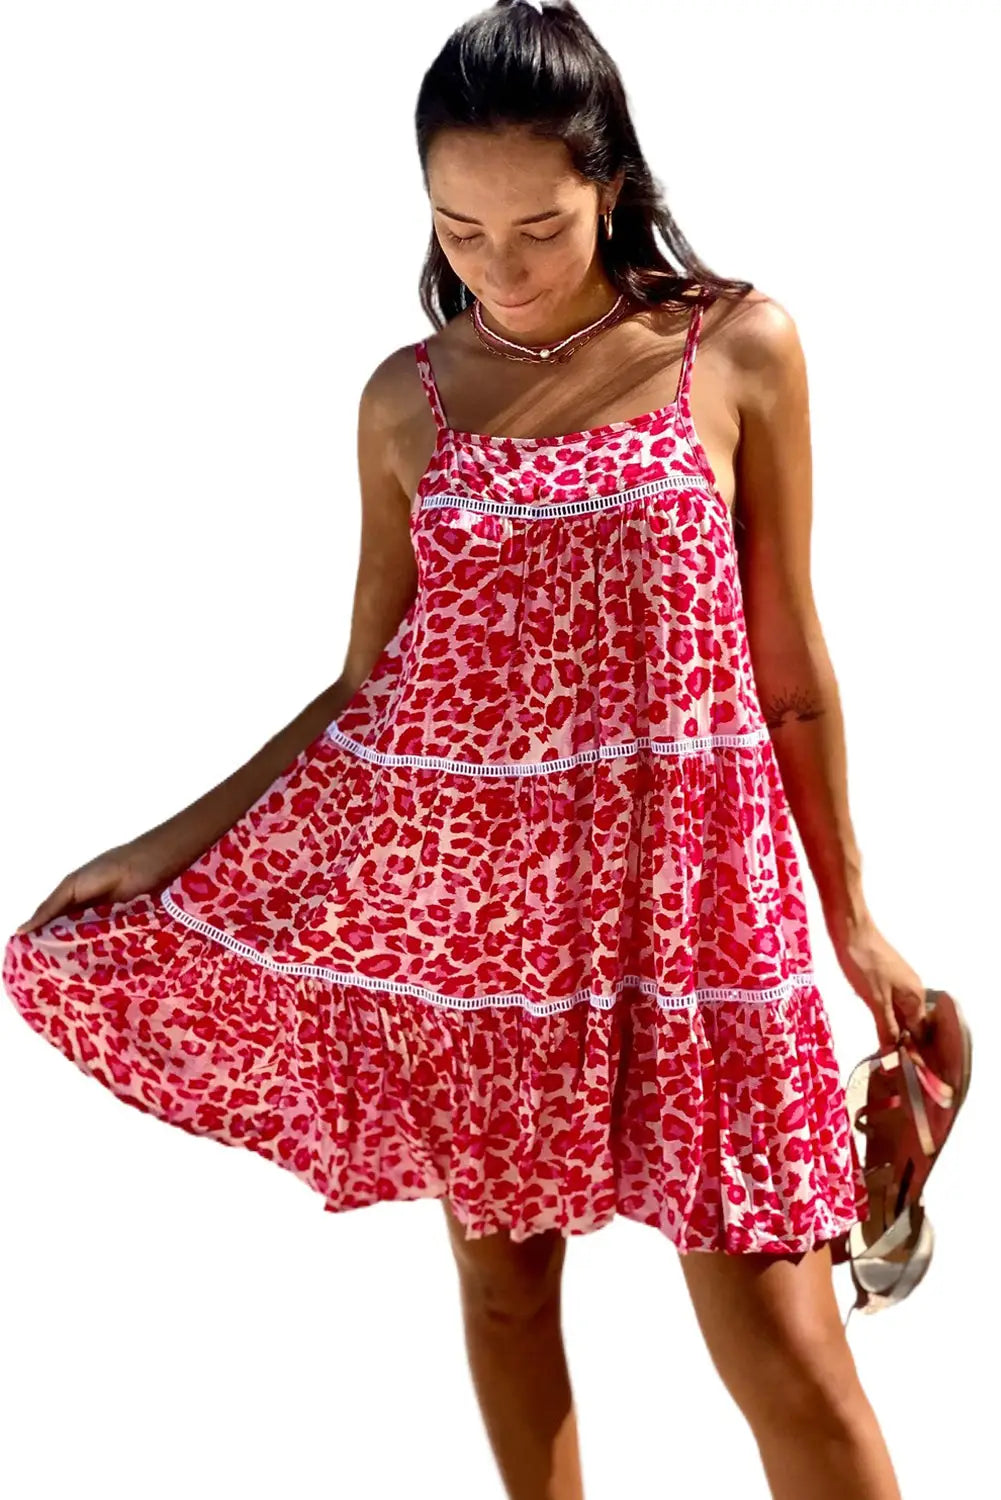 Rose leopard print lace trim flared sundress - mini dresses